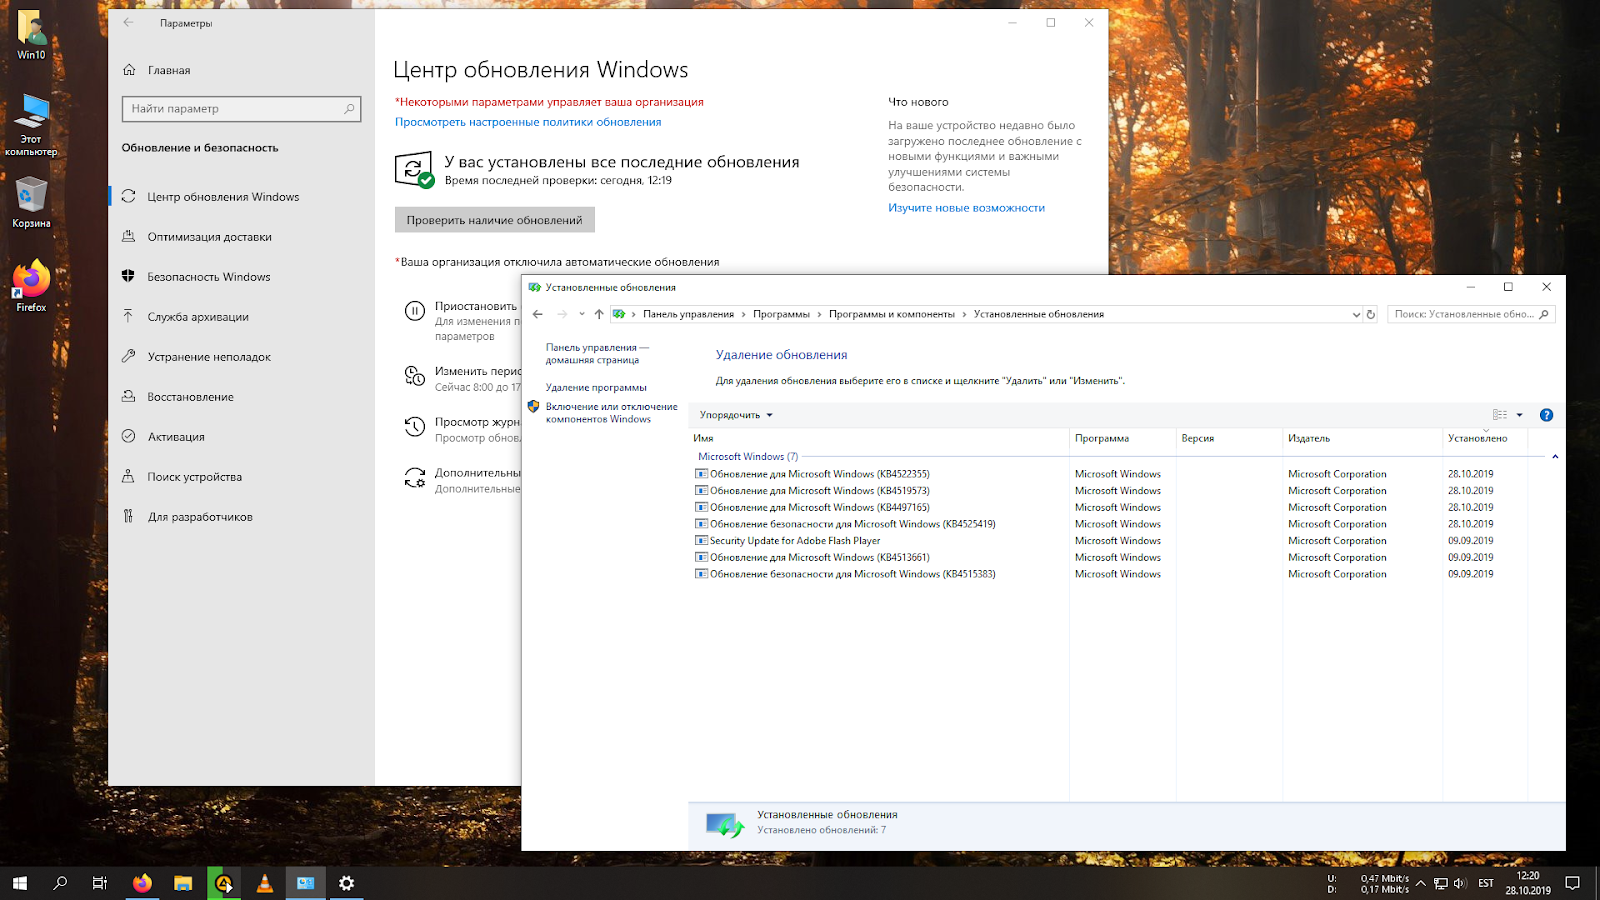 Windows 10 Pro VL 1903 Anti-Spy Edition build 18362.295 u. Ошибка требуется Windows 10 версии 1903. 10 версия 1903